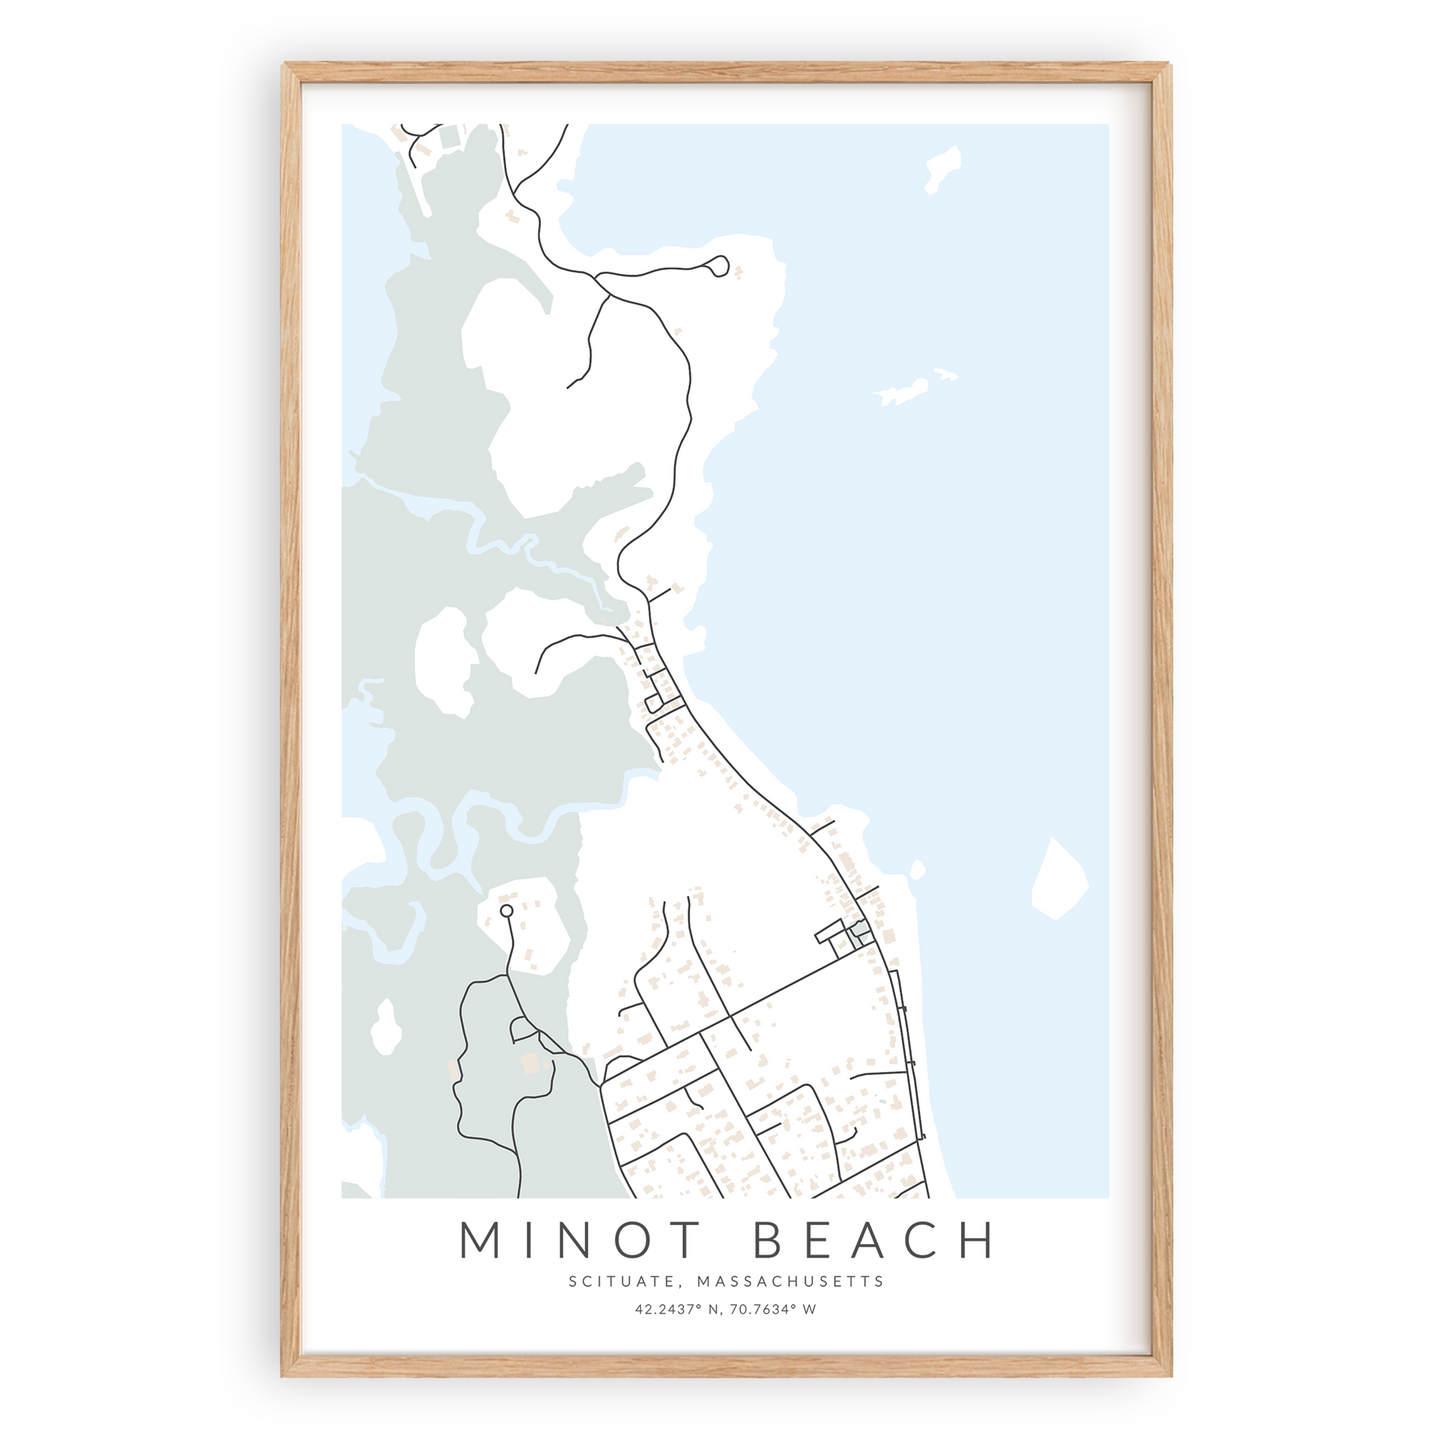 minot beach scituate massachusetts map print in wood frame